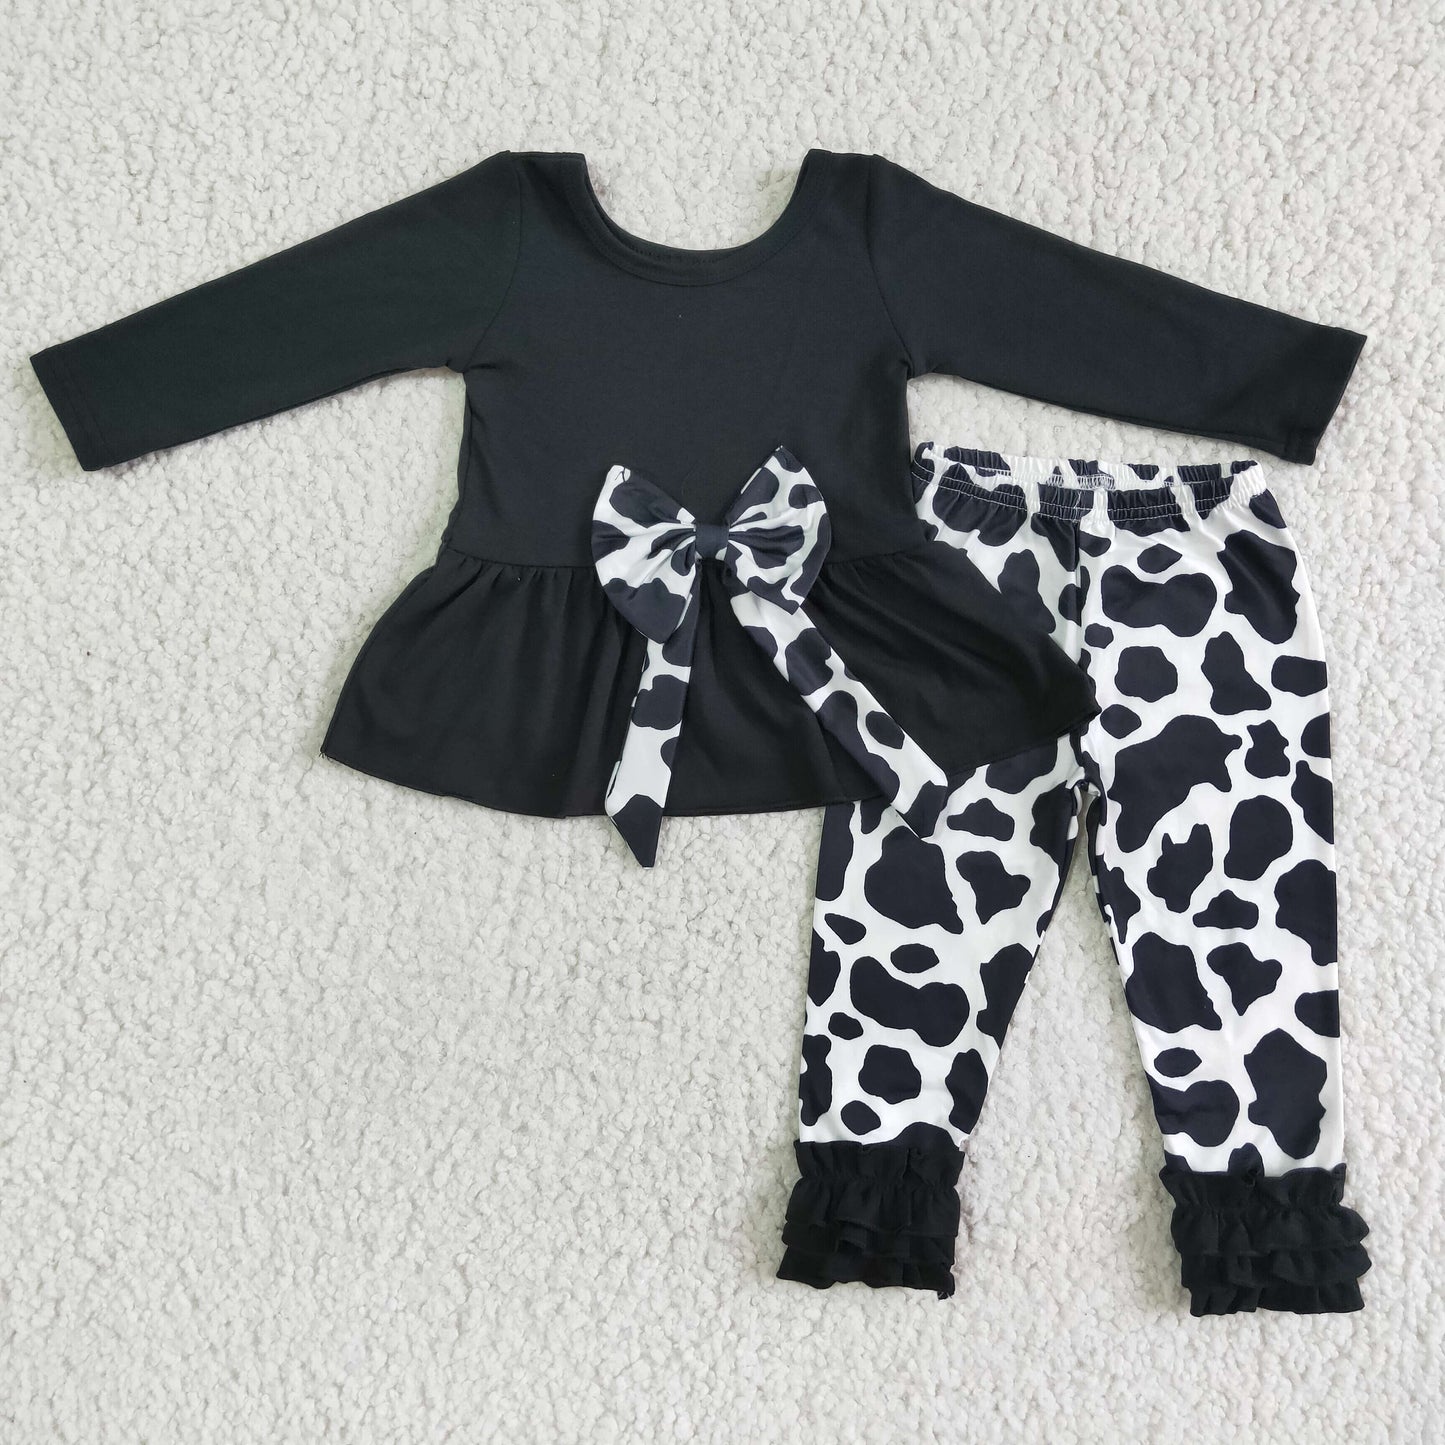 Black peplum match cow icing ruffle leggings outfits